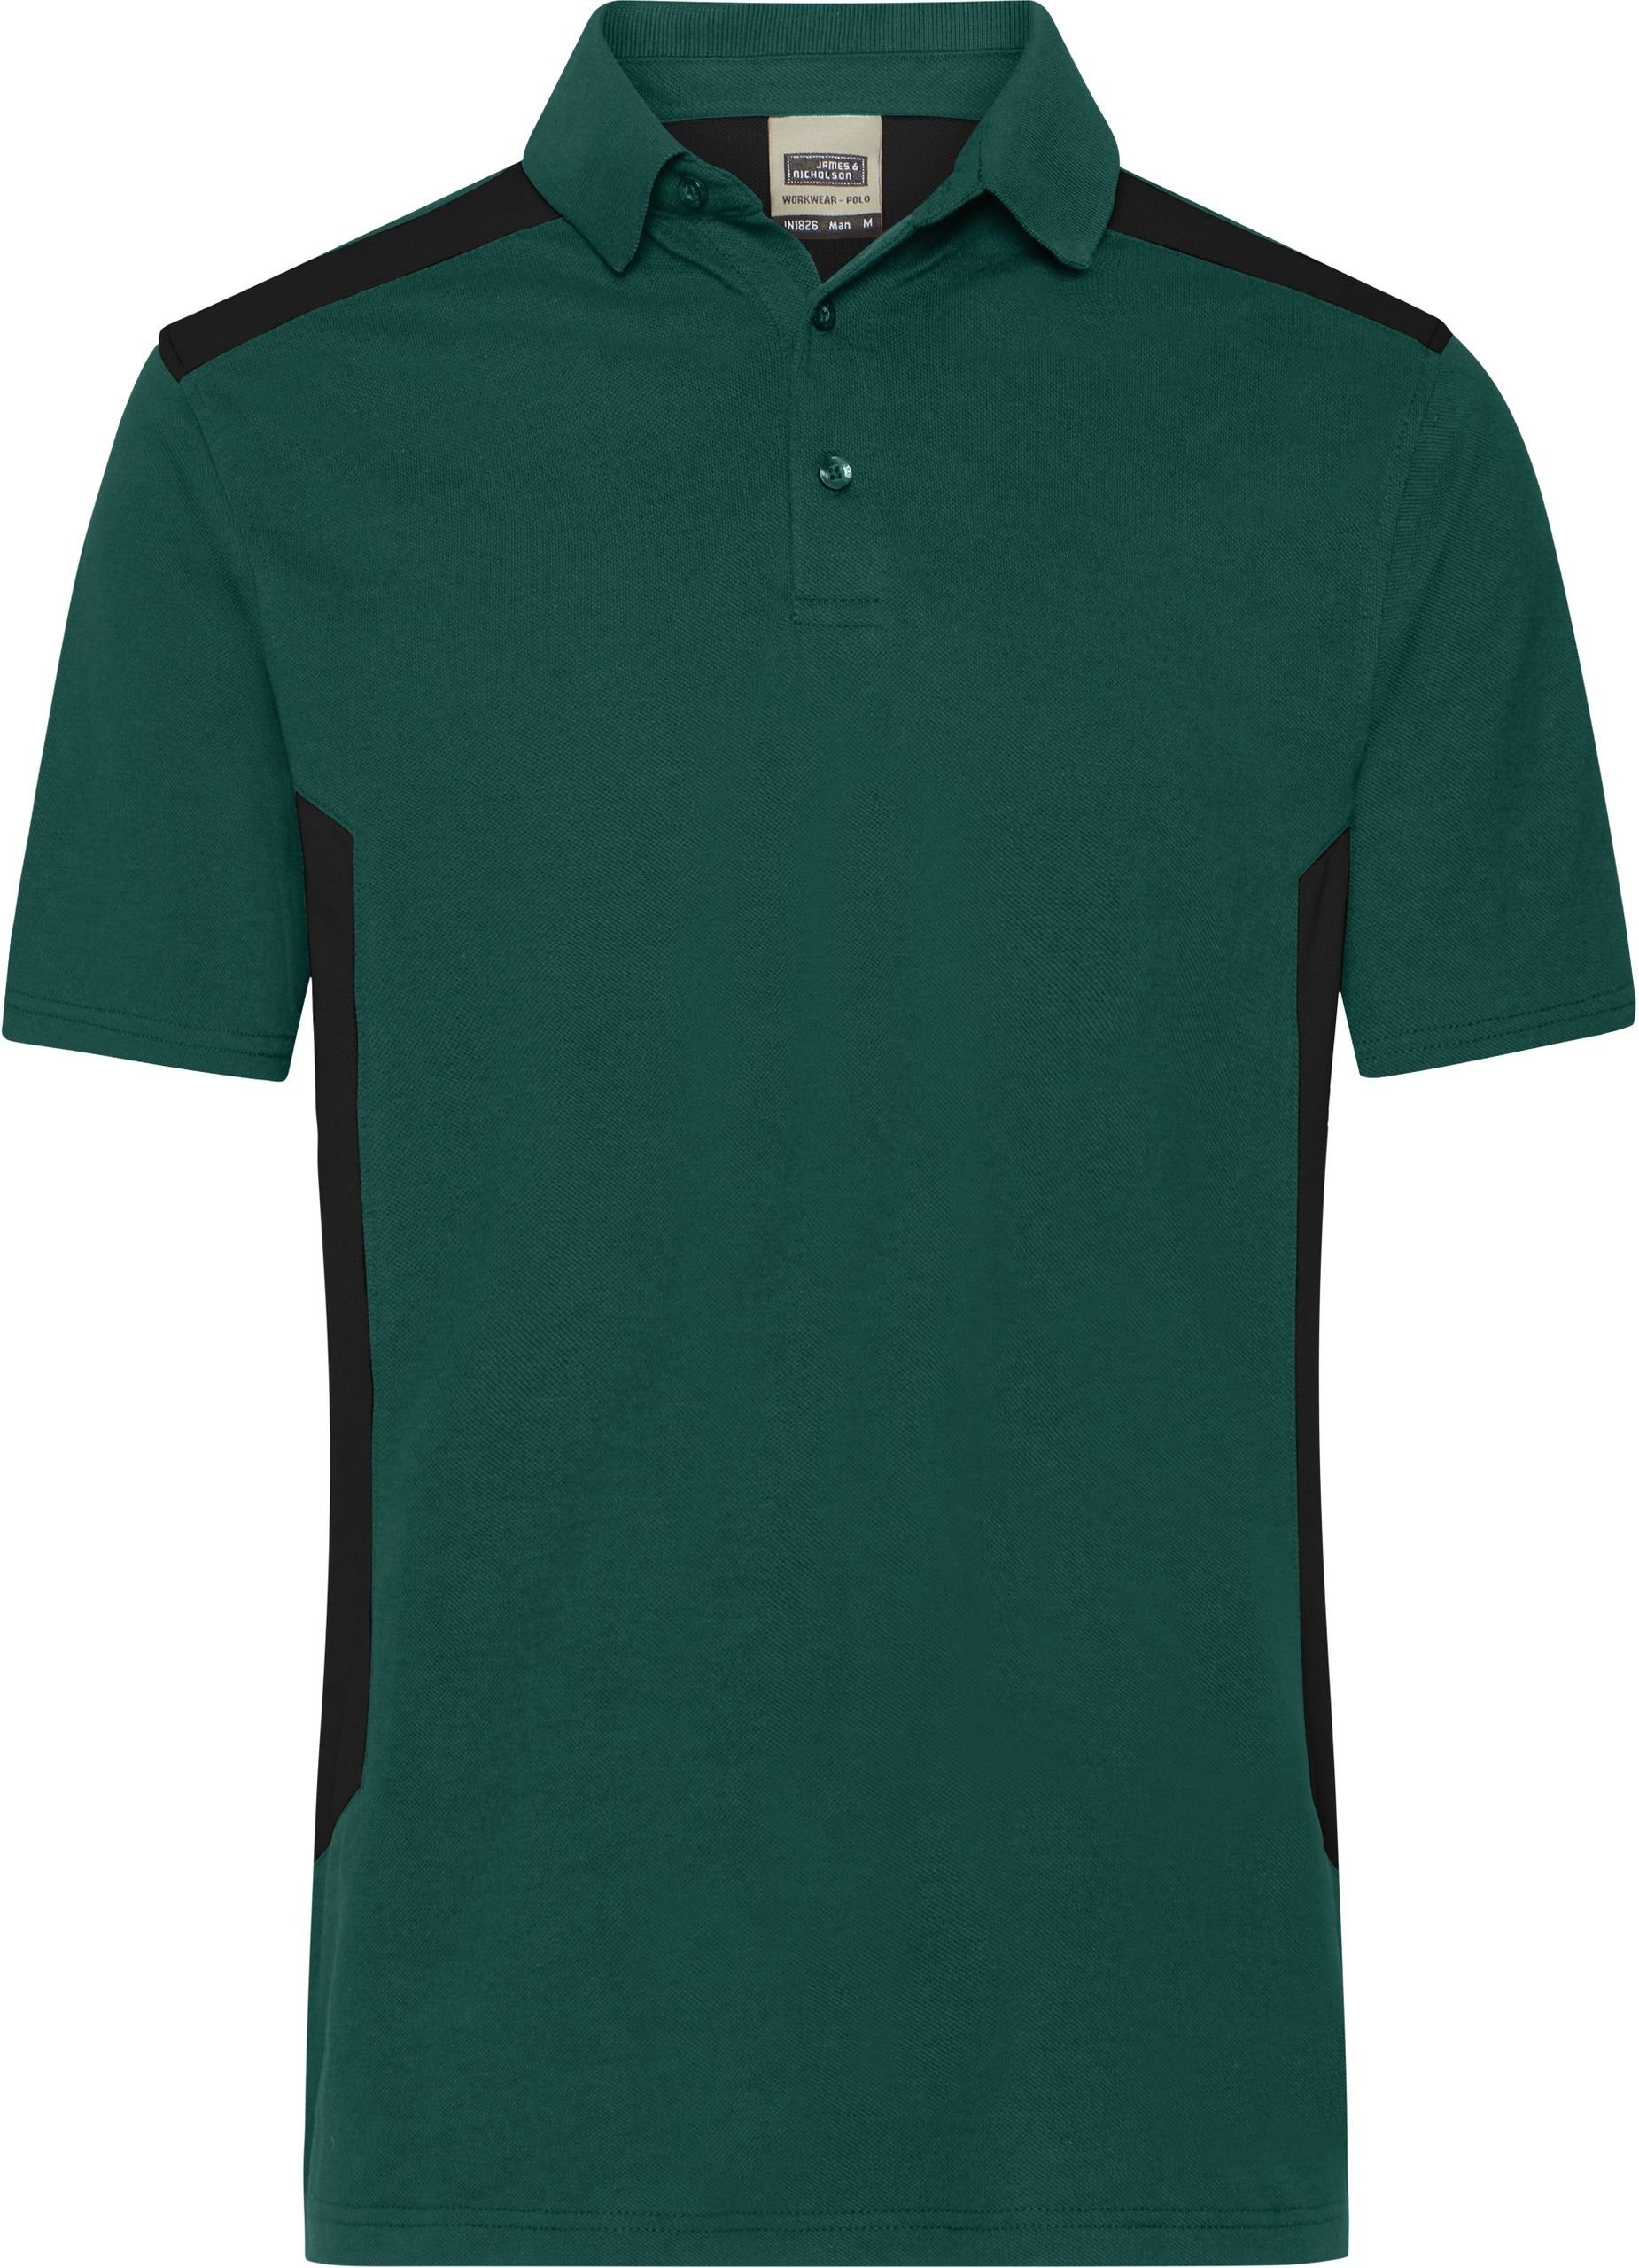 James & Nicholson Poloshirt Herren Workwear Polo - Strong dark green/black